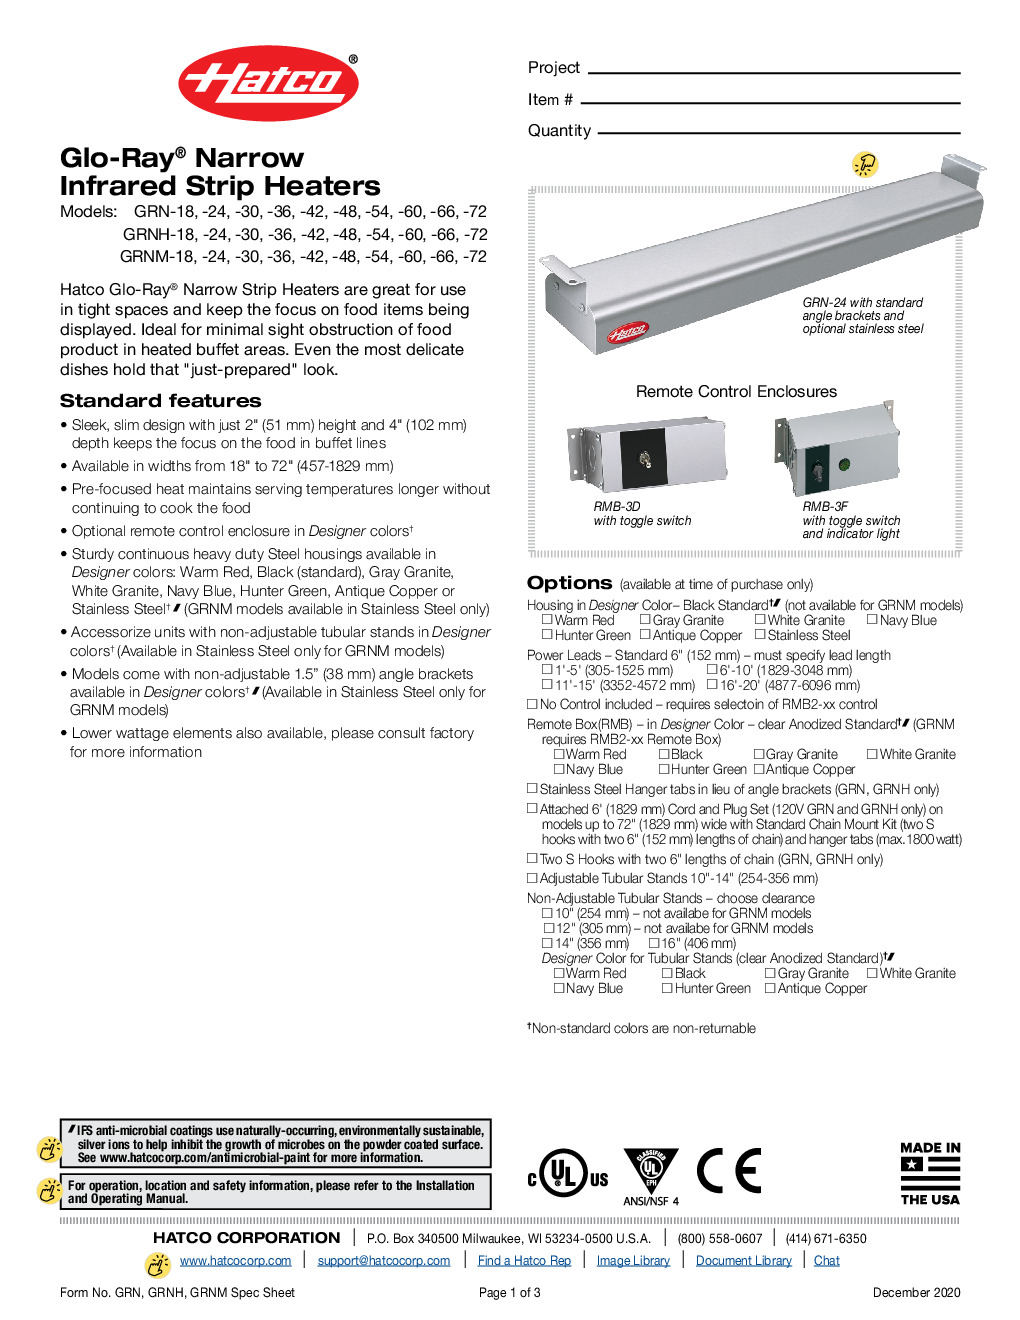 Hatco GRN/H-54 Glo-Ray Narrow Infrared Strip Heaters